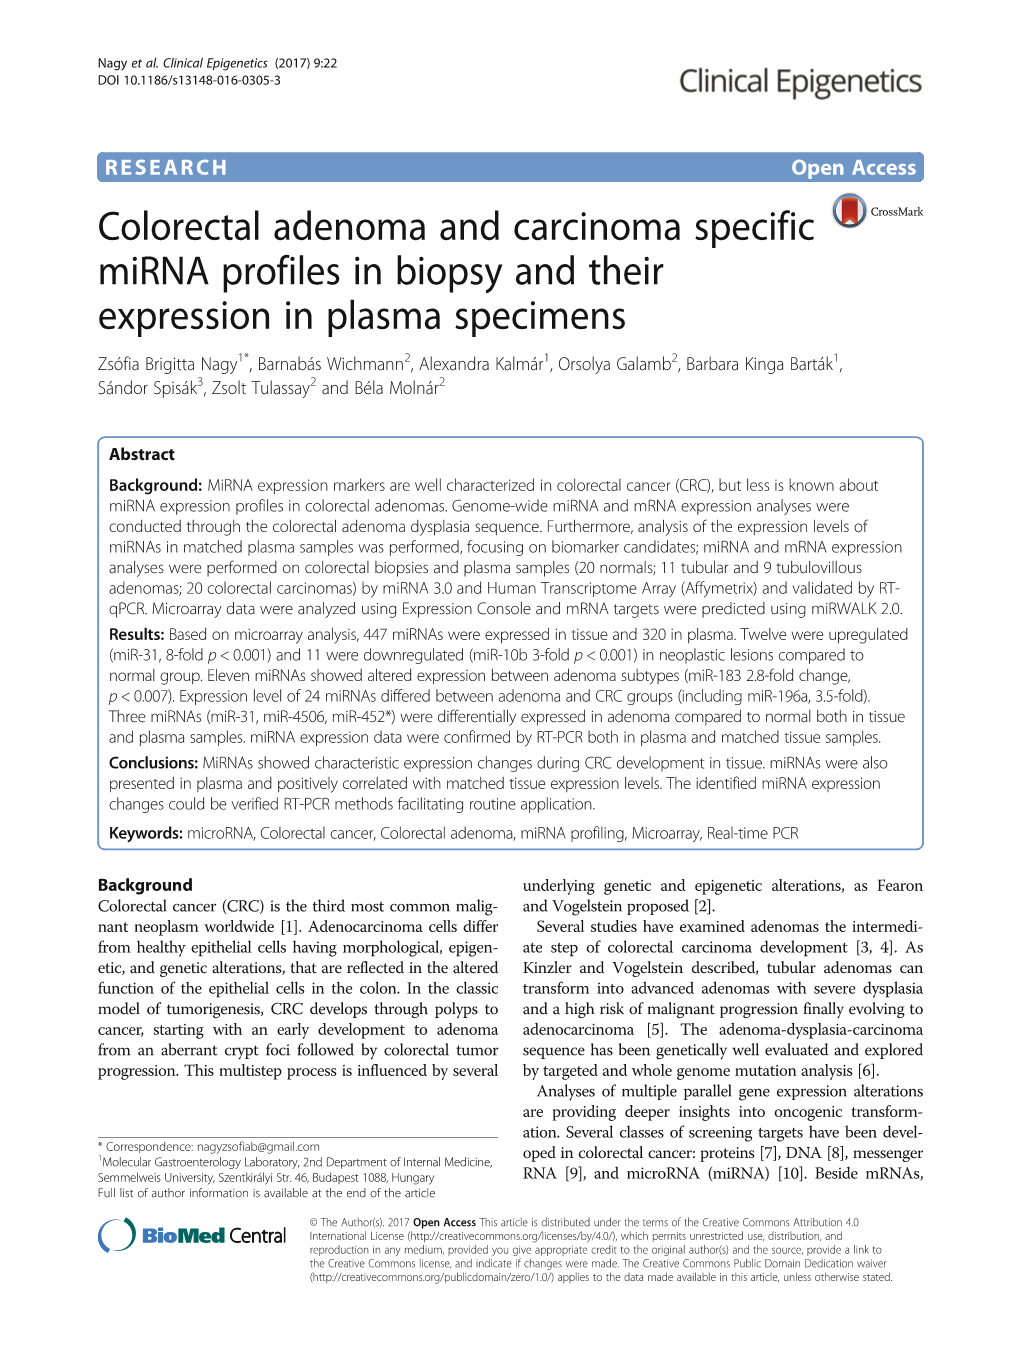 Colorectal Adenoma and Carcinoma Specific Mirna Profiles in Biopsy